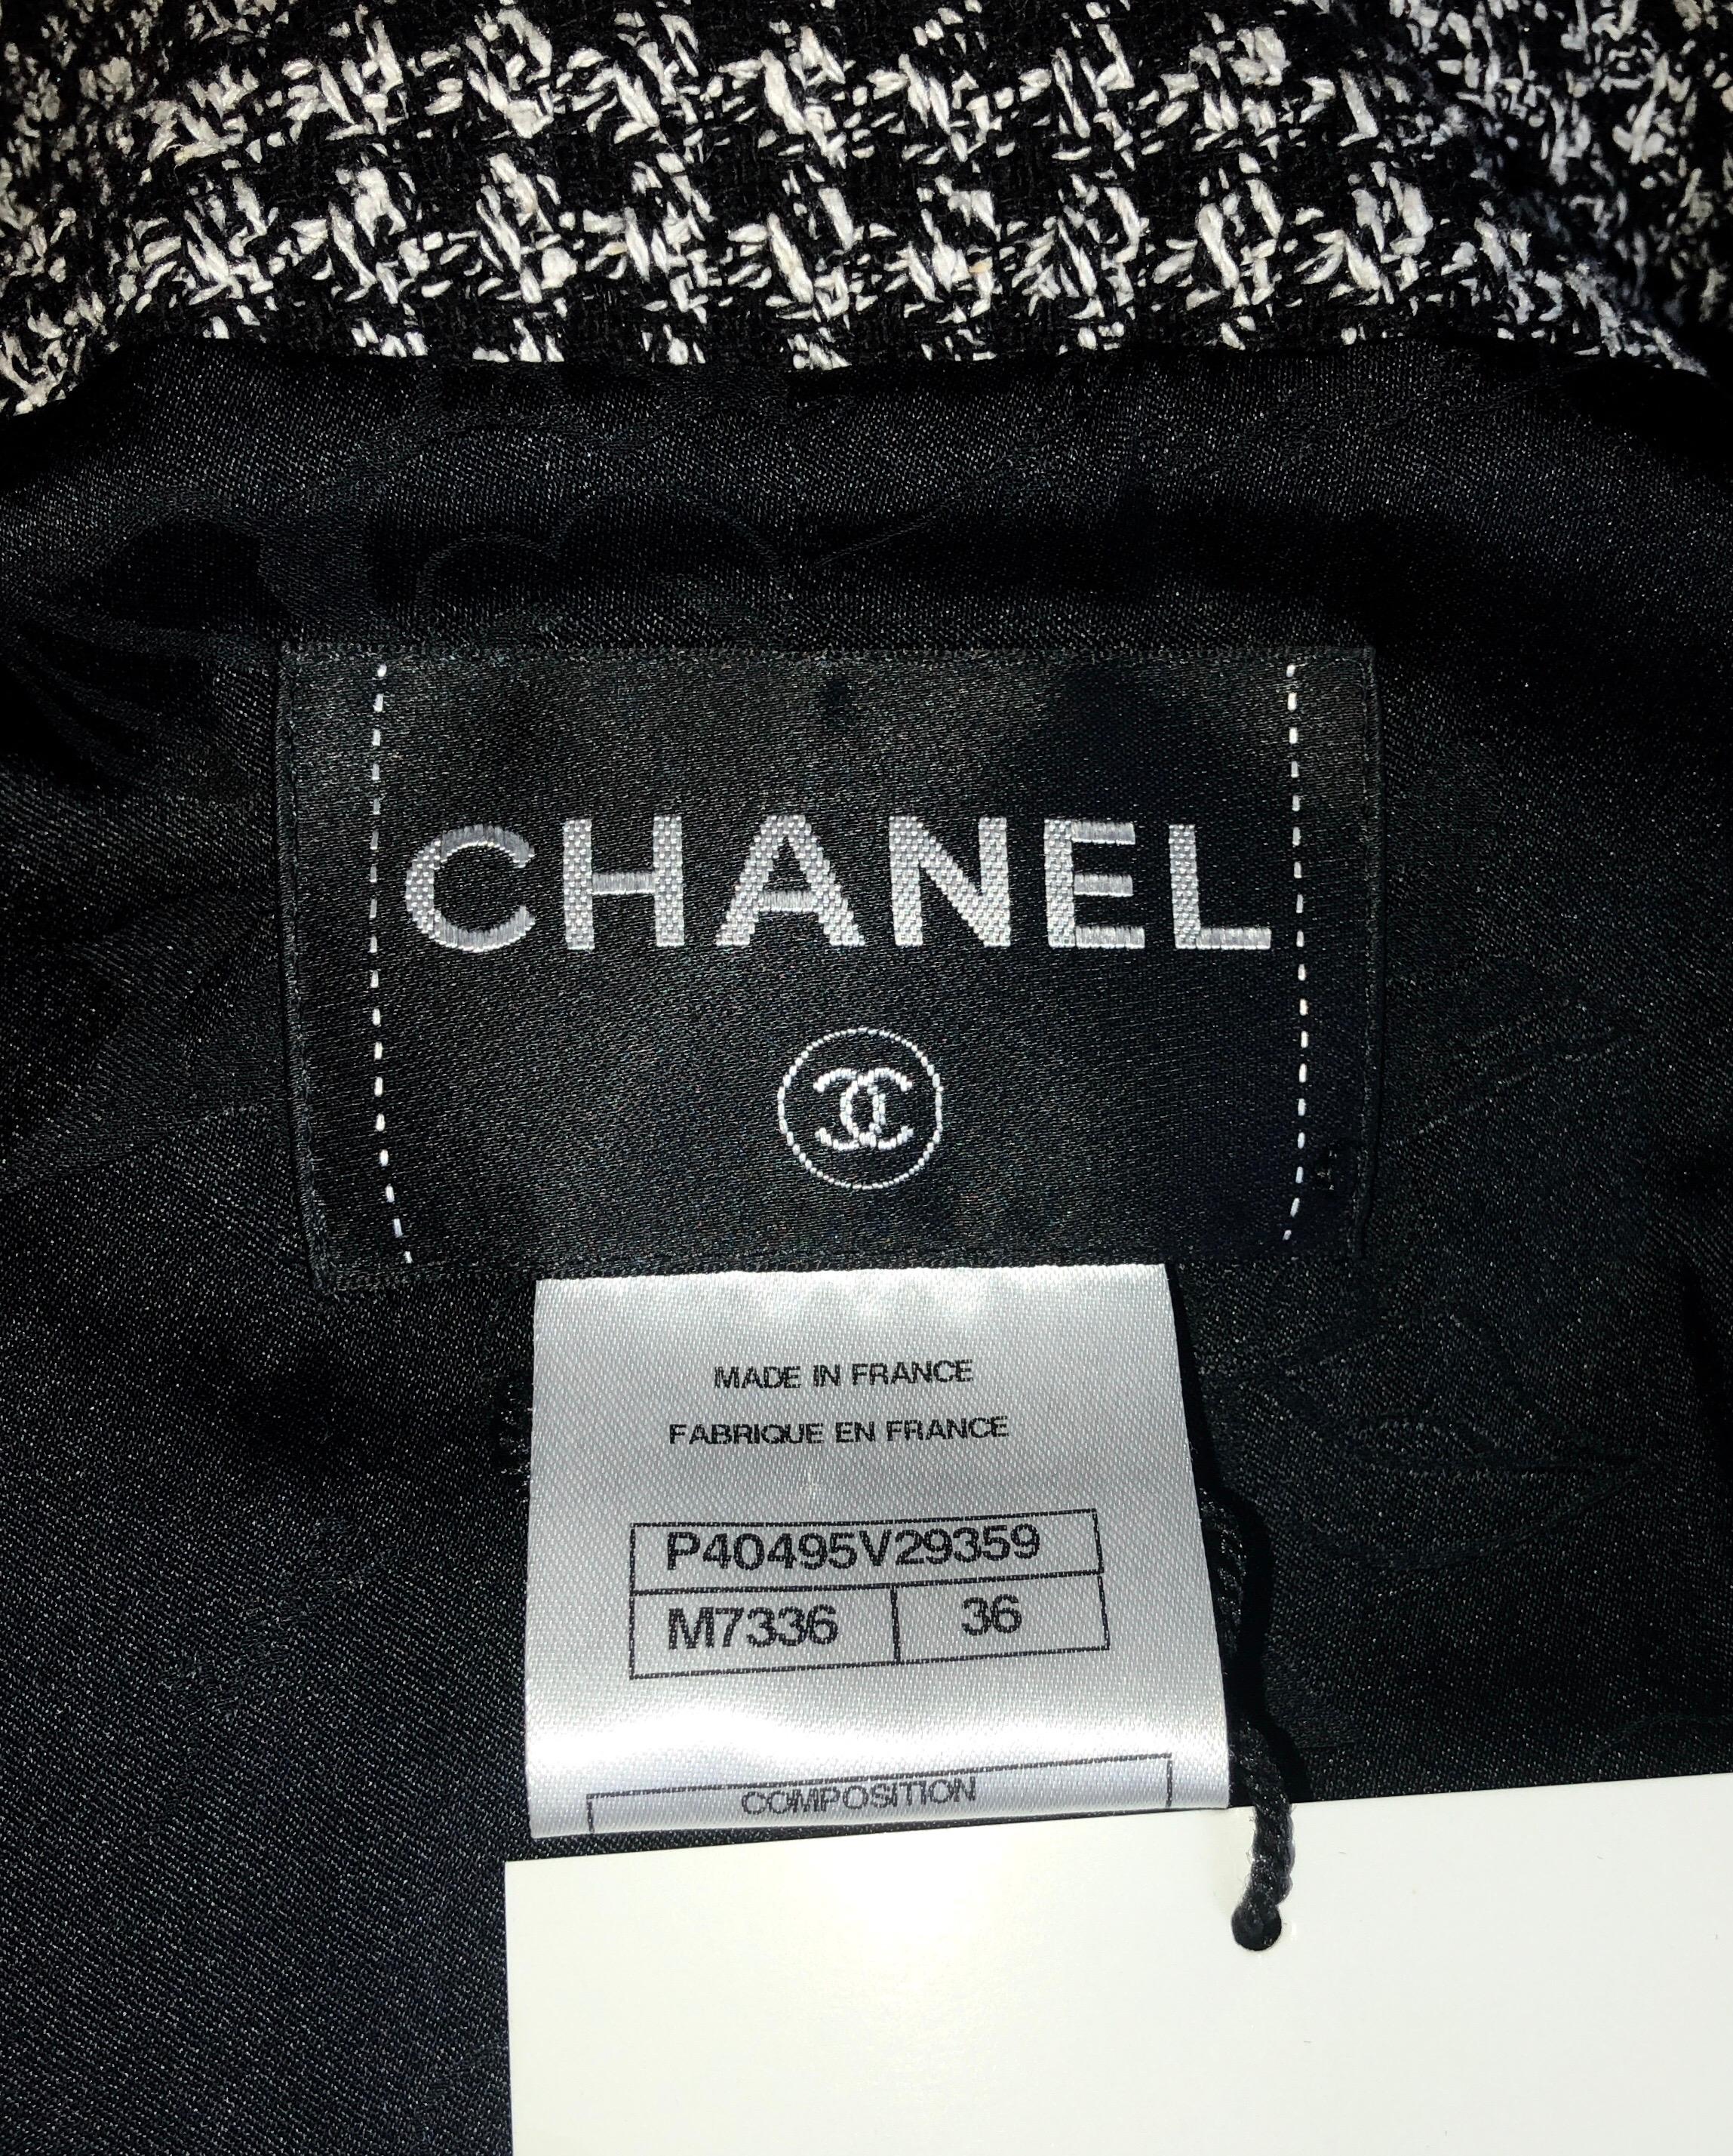 UNWORN Chanel Monochrome Cropped Tweed Jacket Blazer with Braid Trimmings 36 For Sale 1